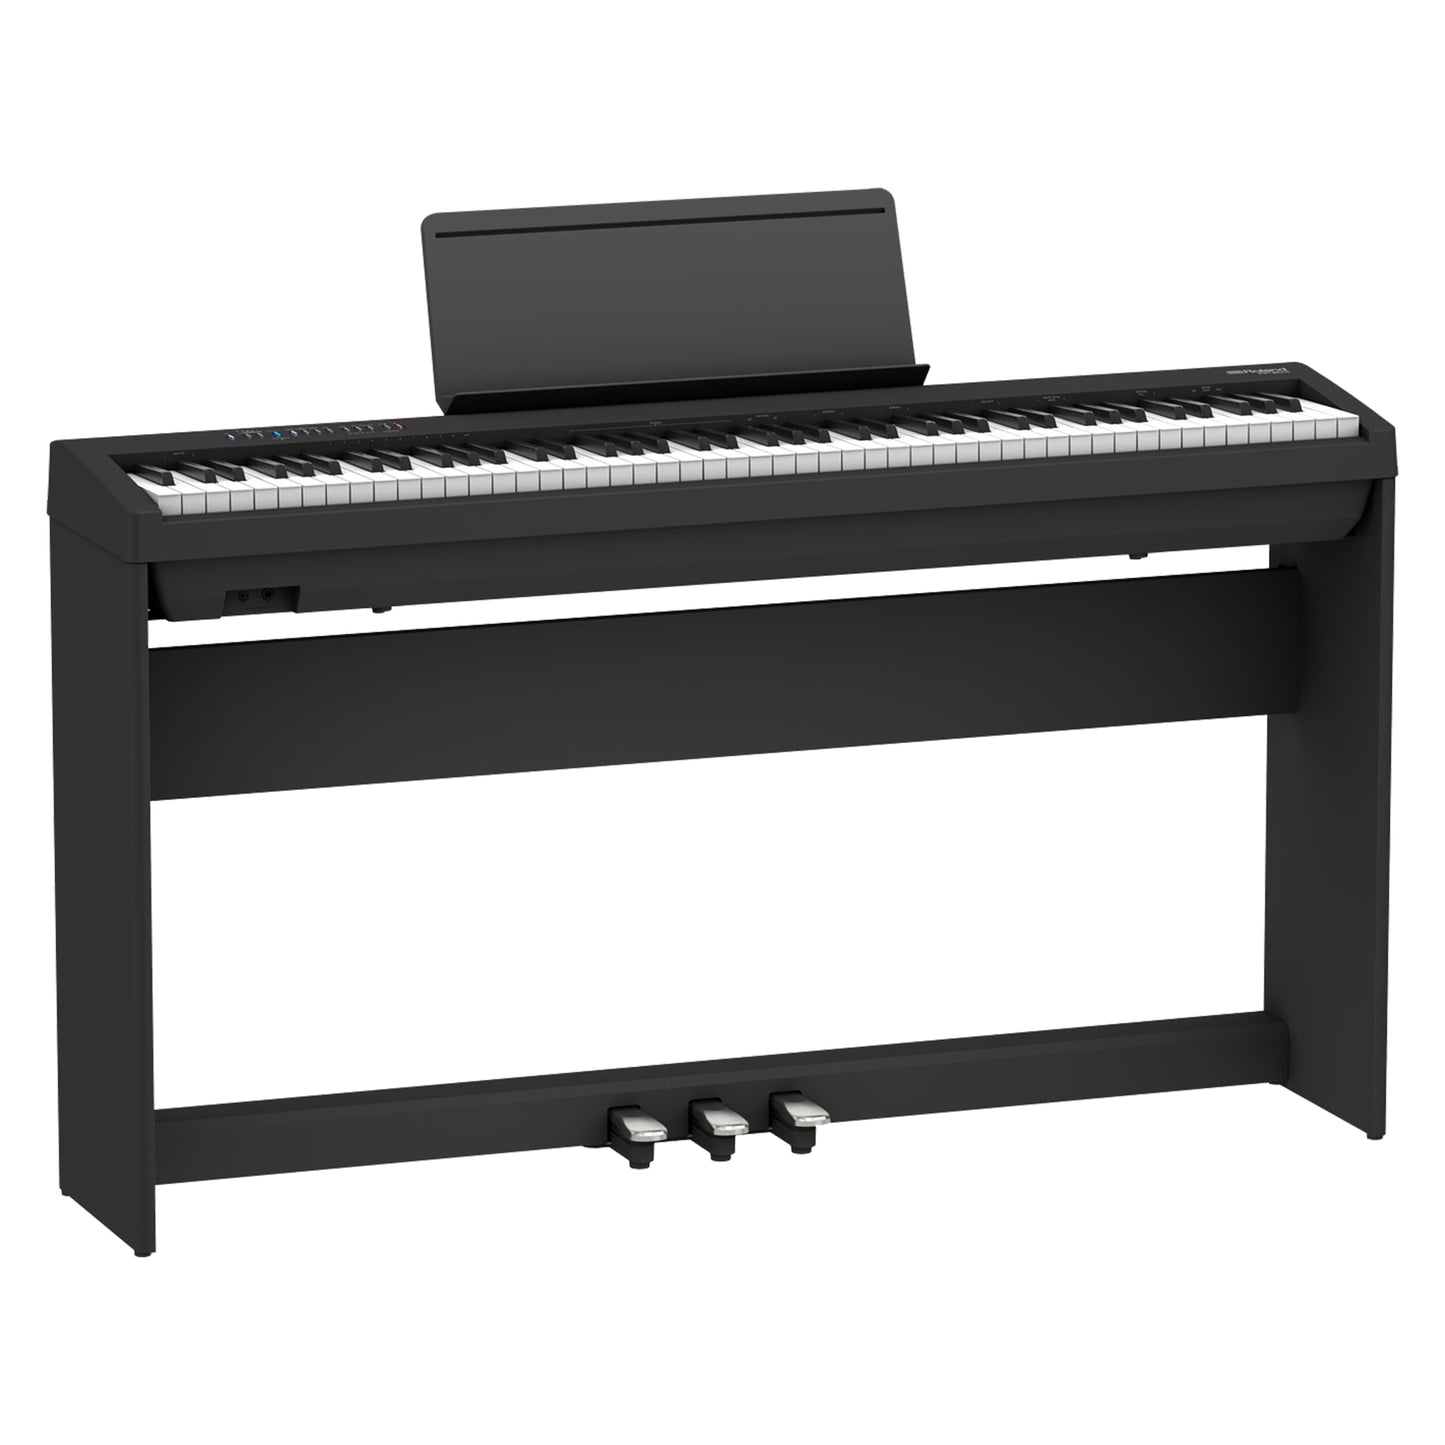 Roland FP-30X 88-Keys Portable Digital Piano, Black